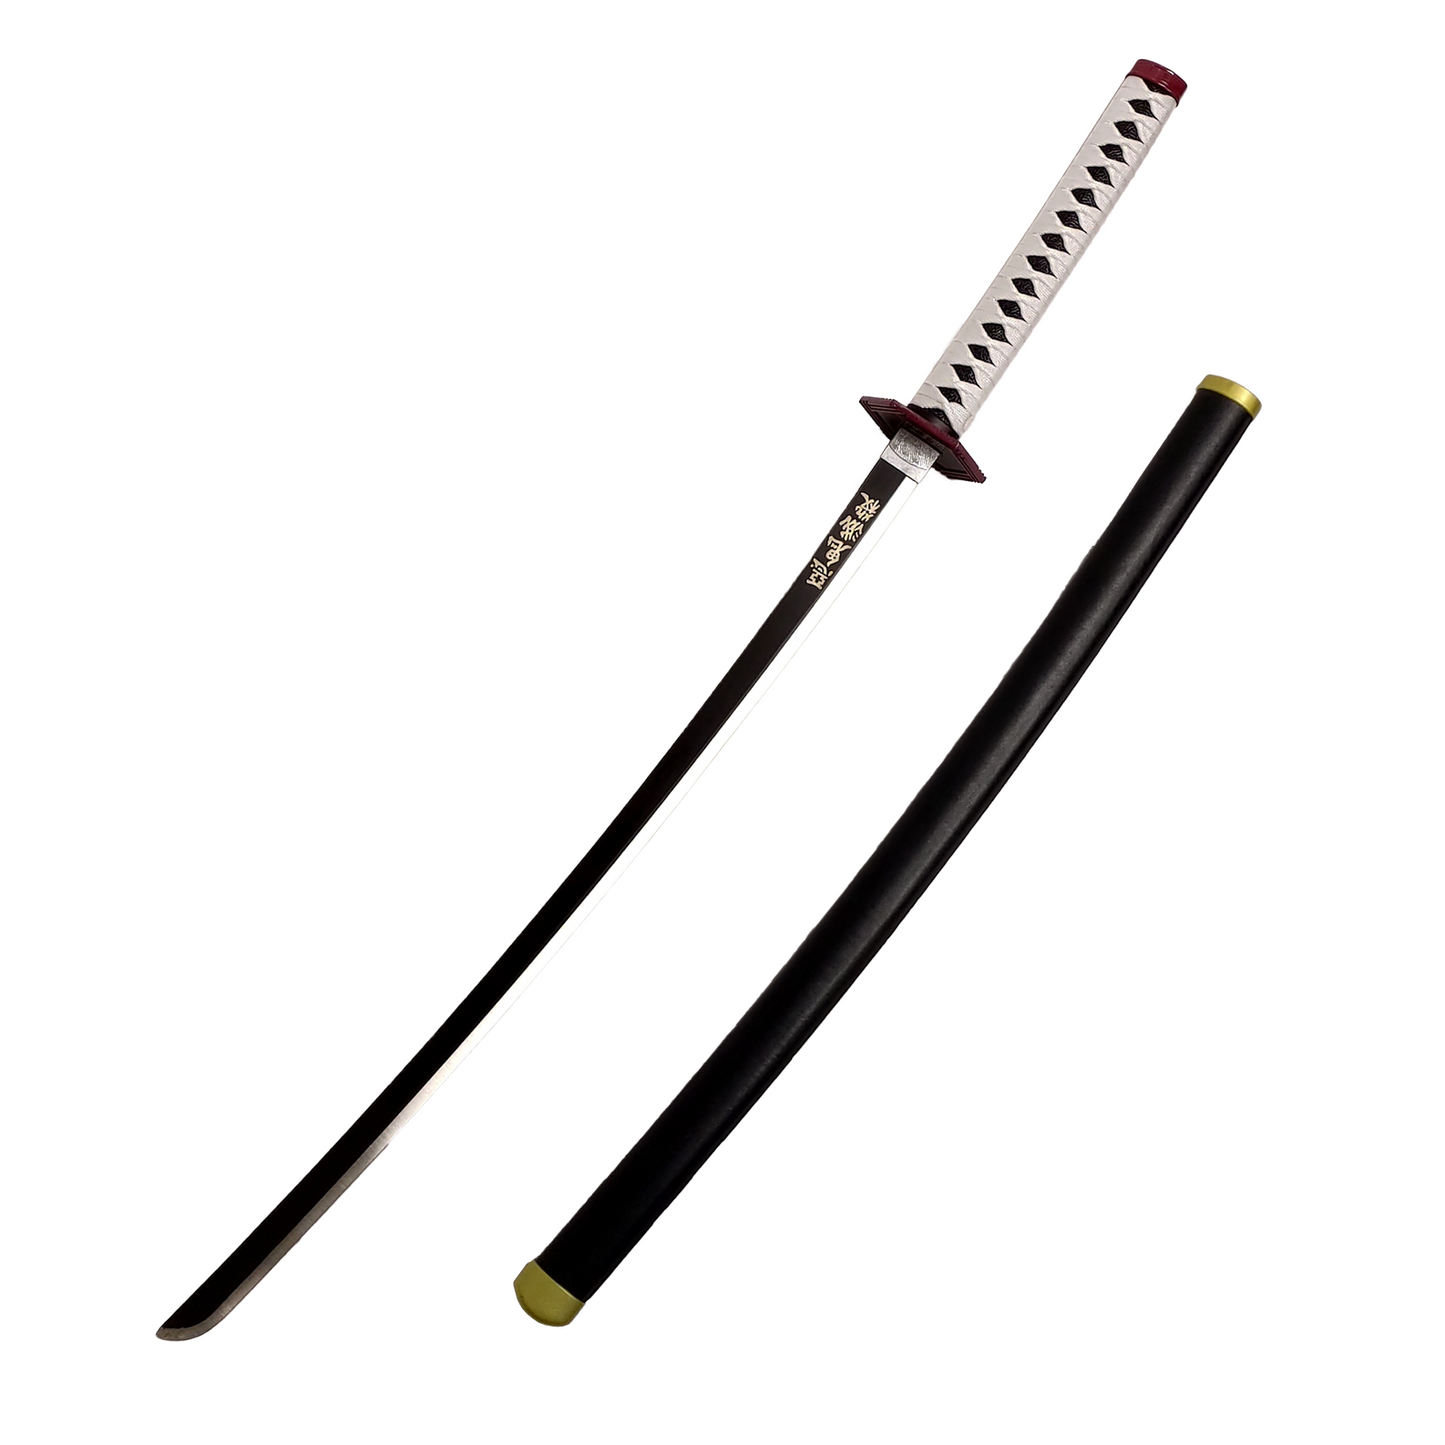 DEMON SLAYER GIYU TOMIOKA'S NICHIRIN SWORD